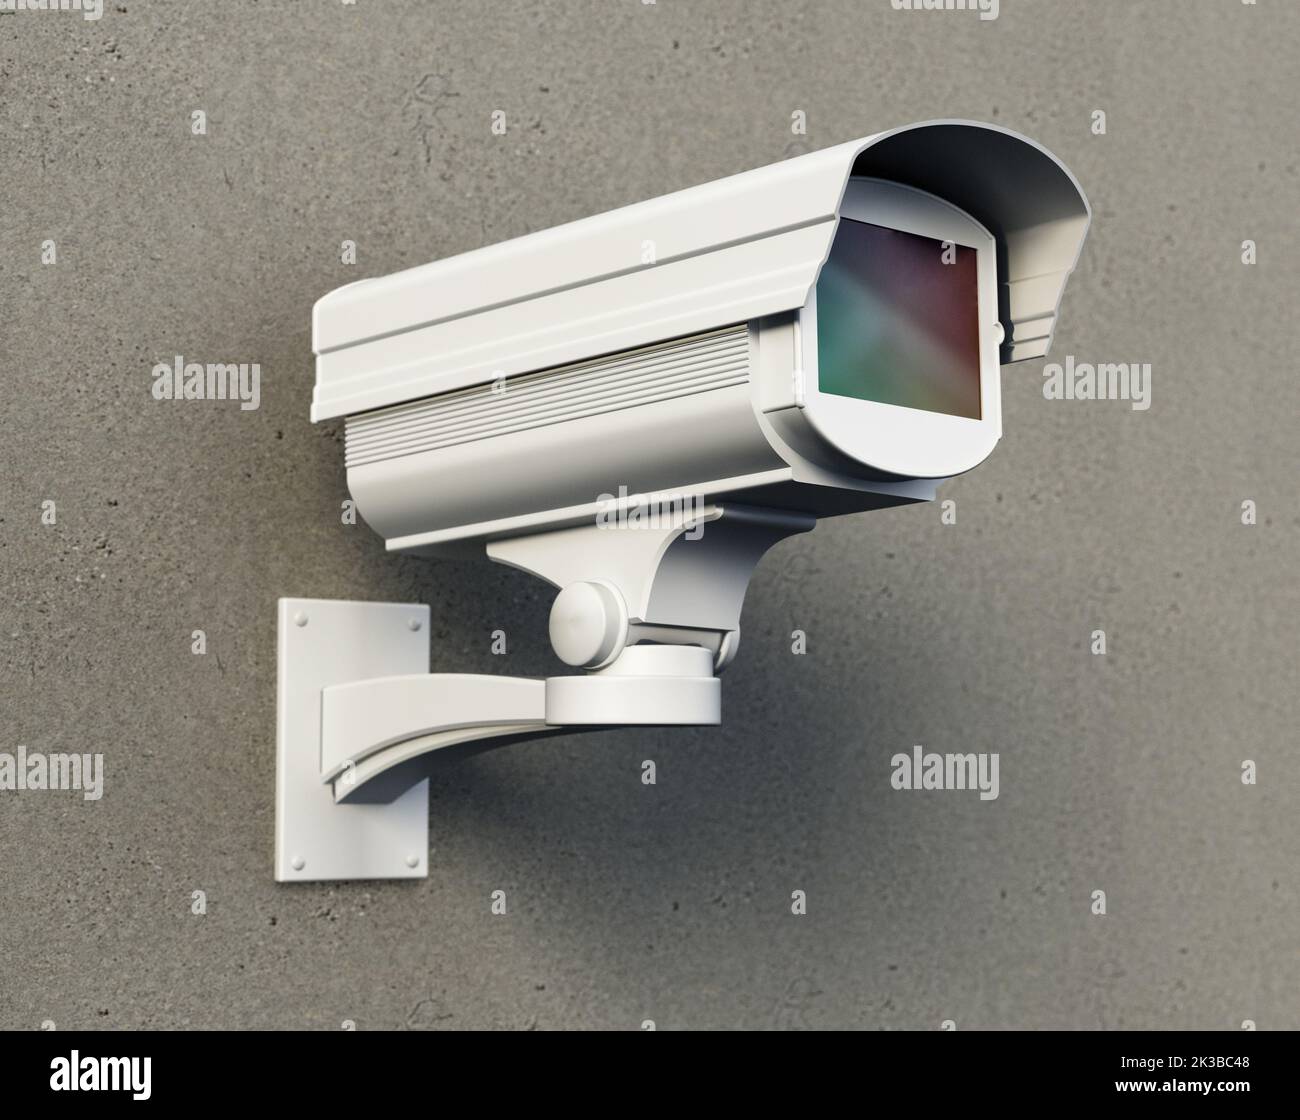 CCTV camera on the wall. 3D illustration. Stock Photo